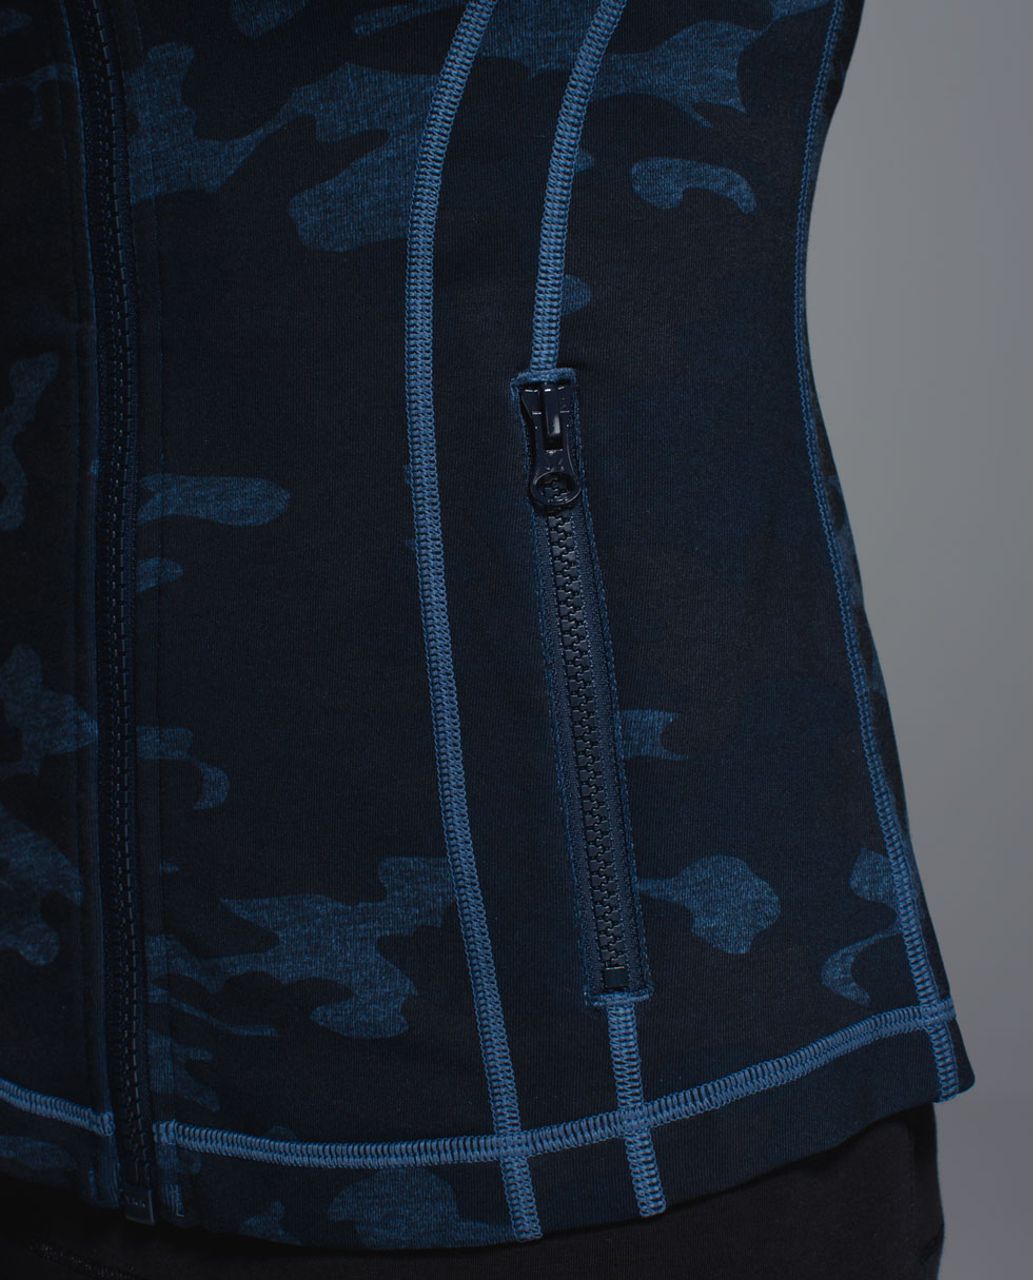 NEW LULULEMON Define Jacket 4 6 10 Incognito Camo Multi Grey